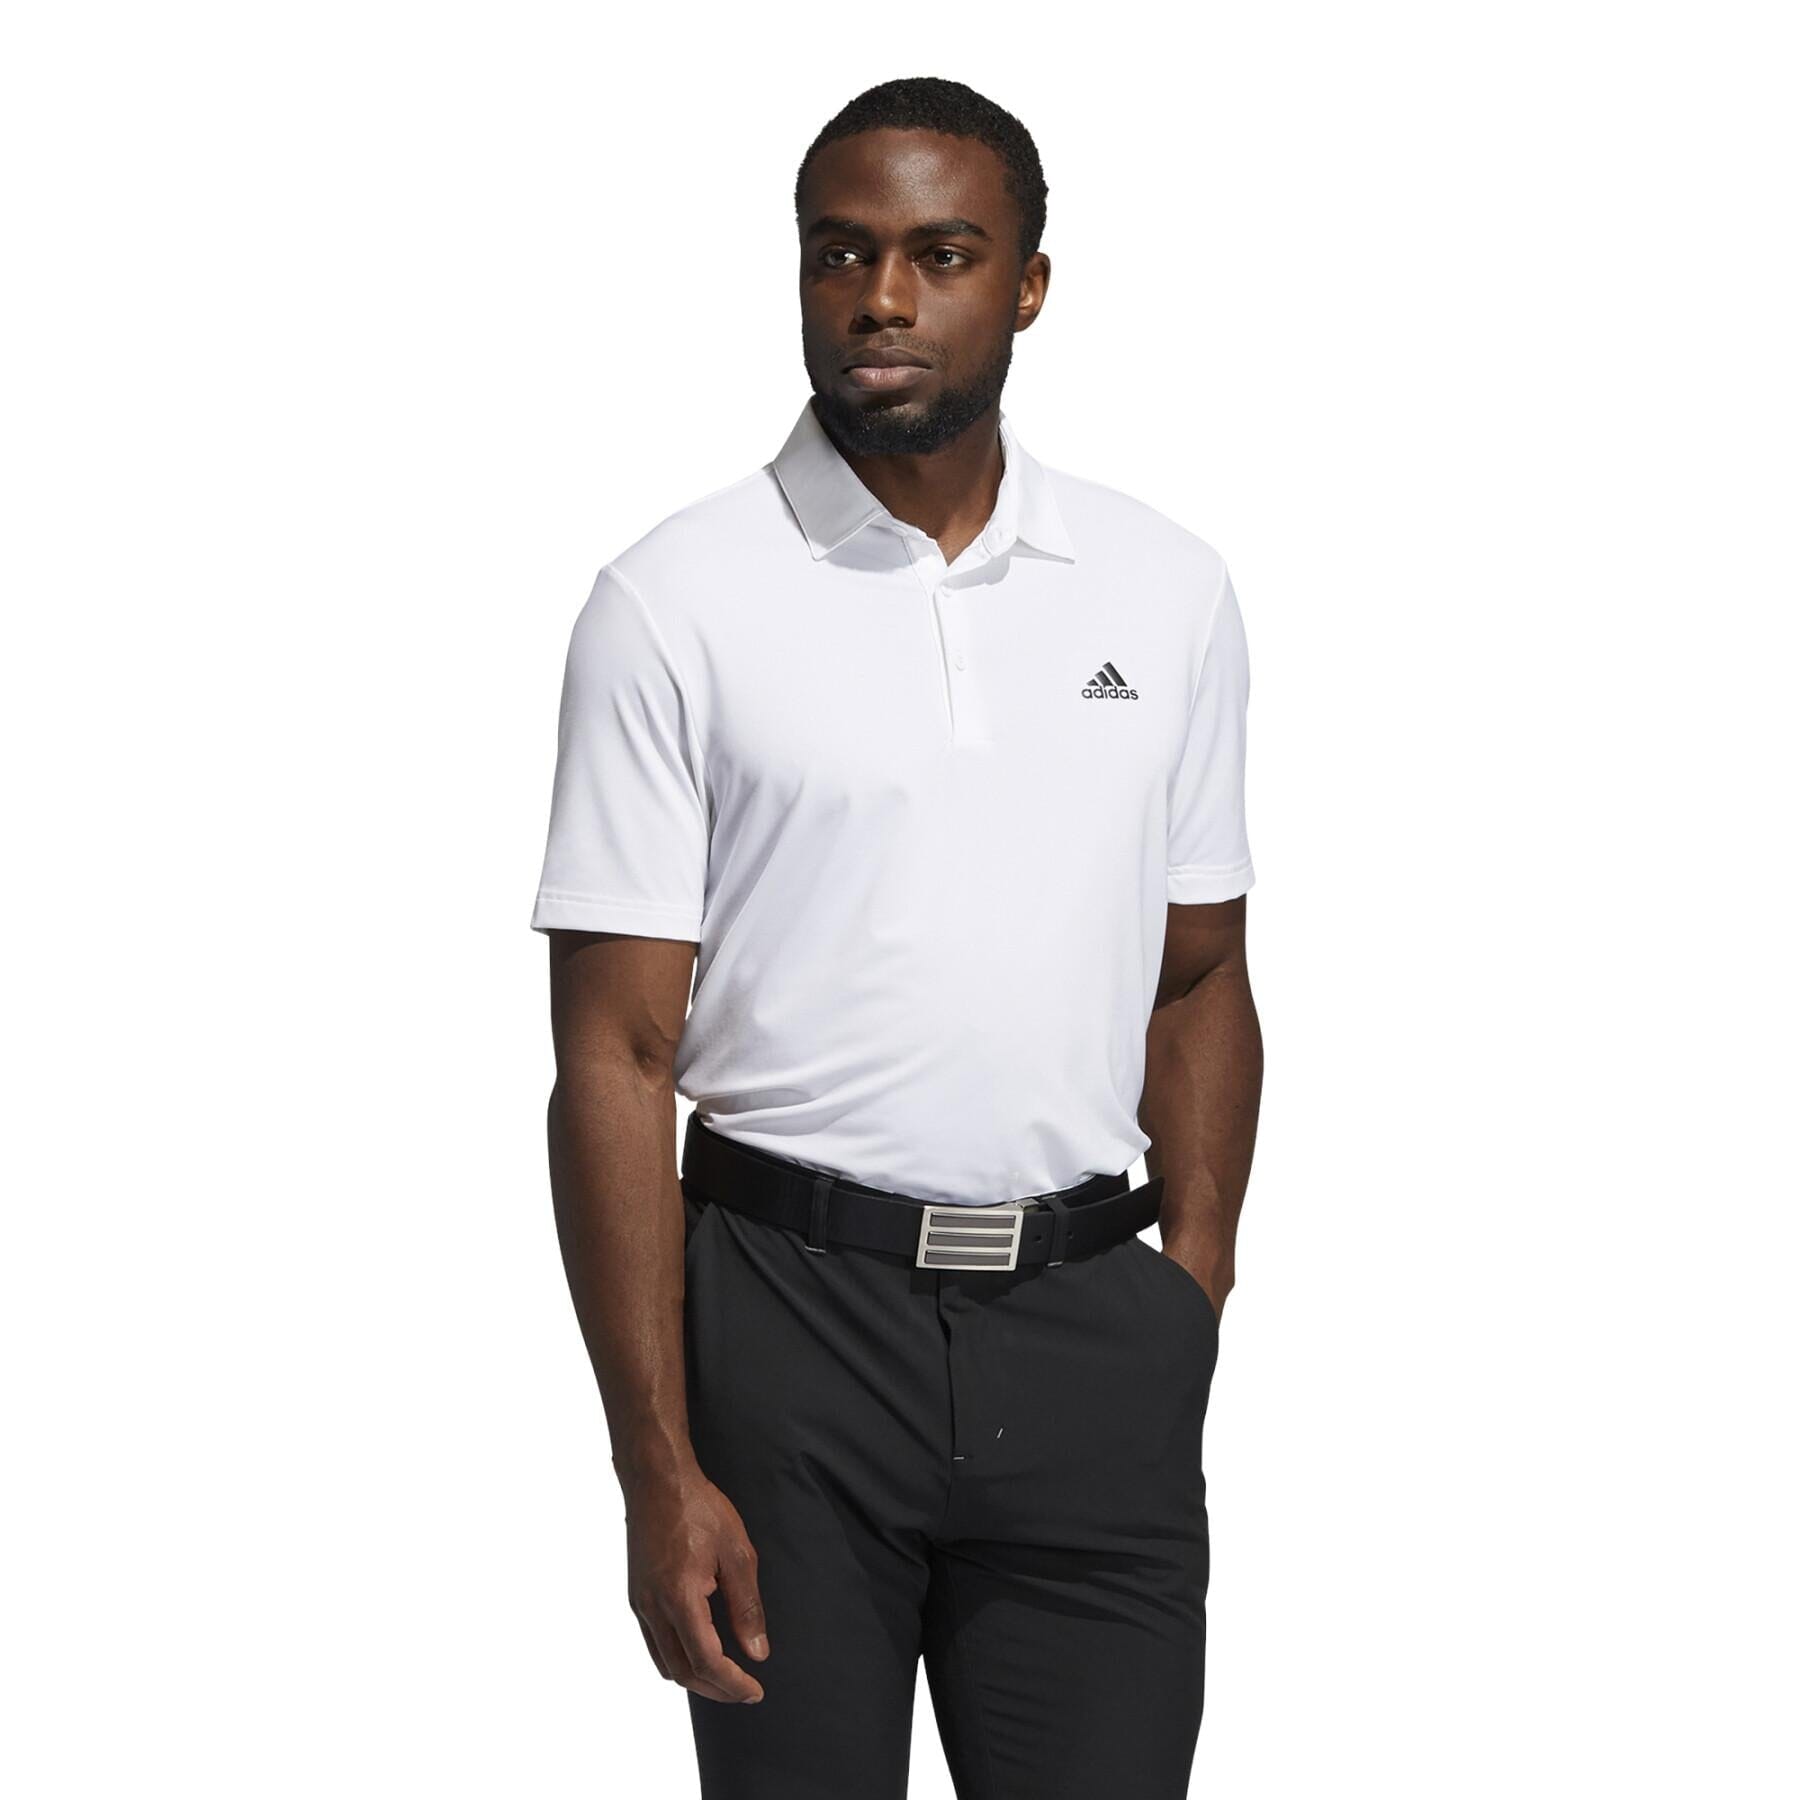 Adidas Ultimate 365 Solid Left Chest Golf Polo Shirt ADIDAS HOMBRE POLOS adidas